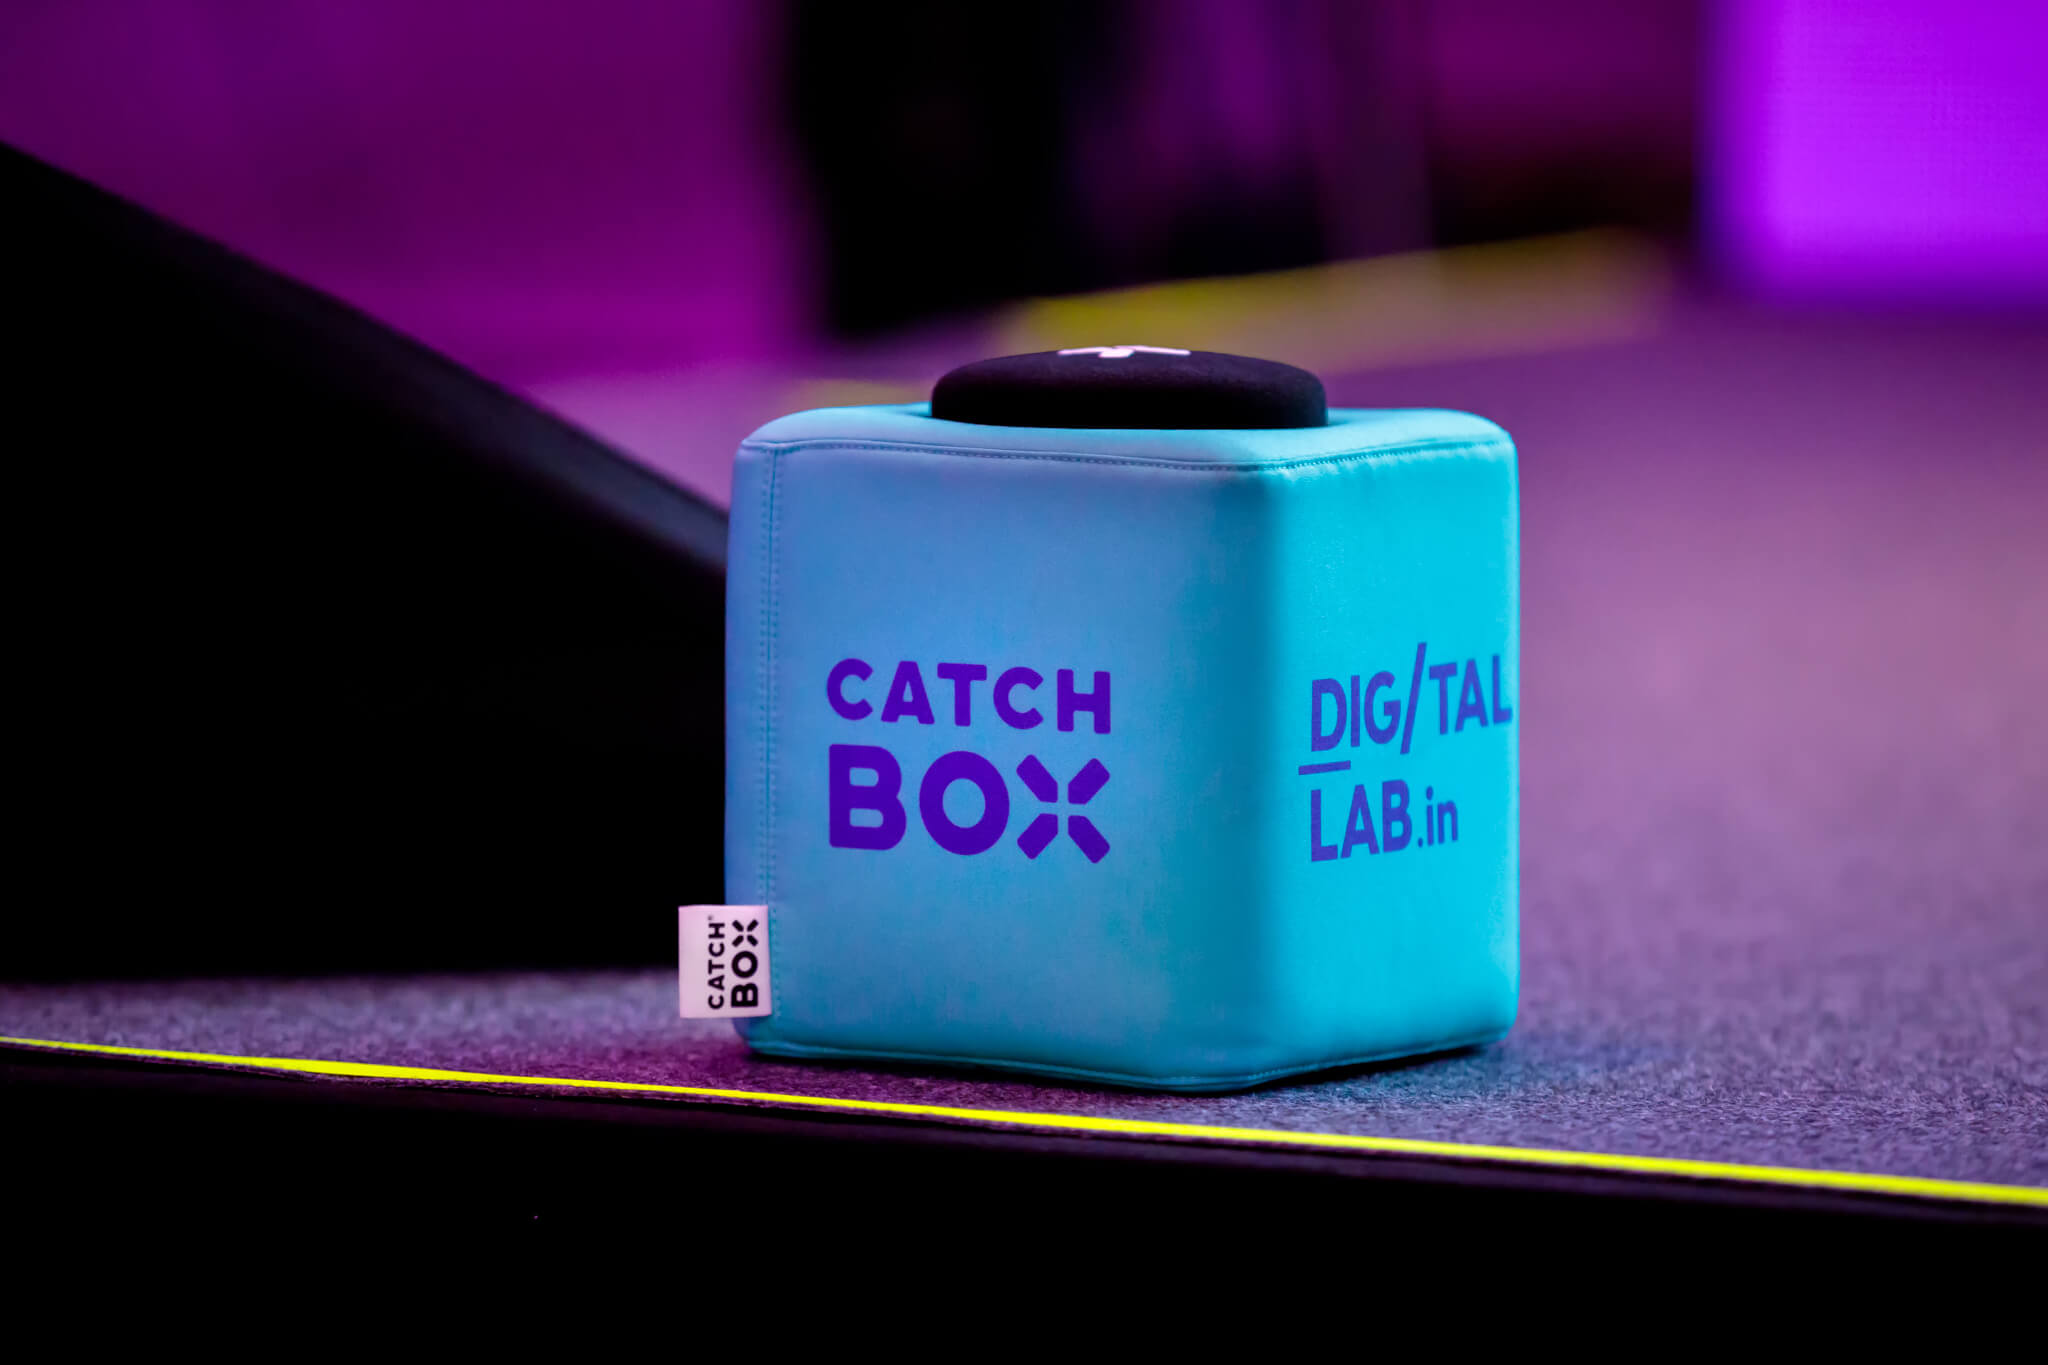 Catchbox at Digital lab event